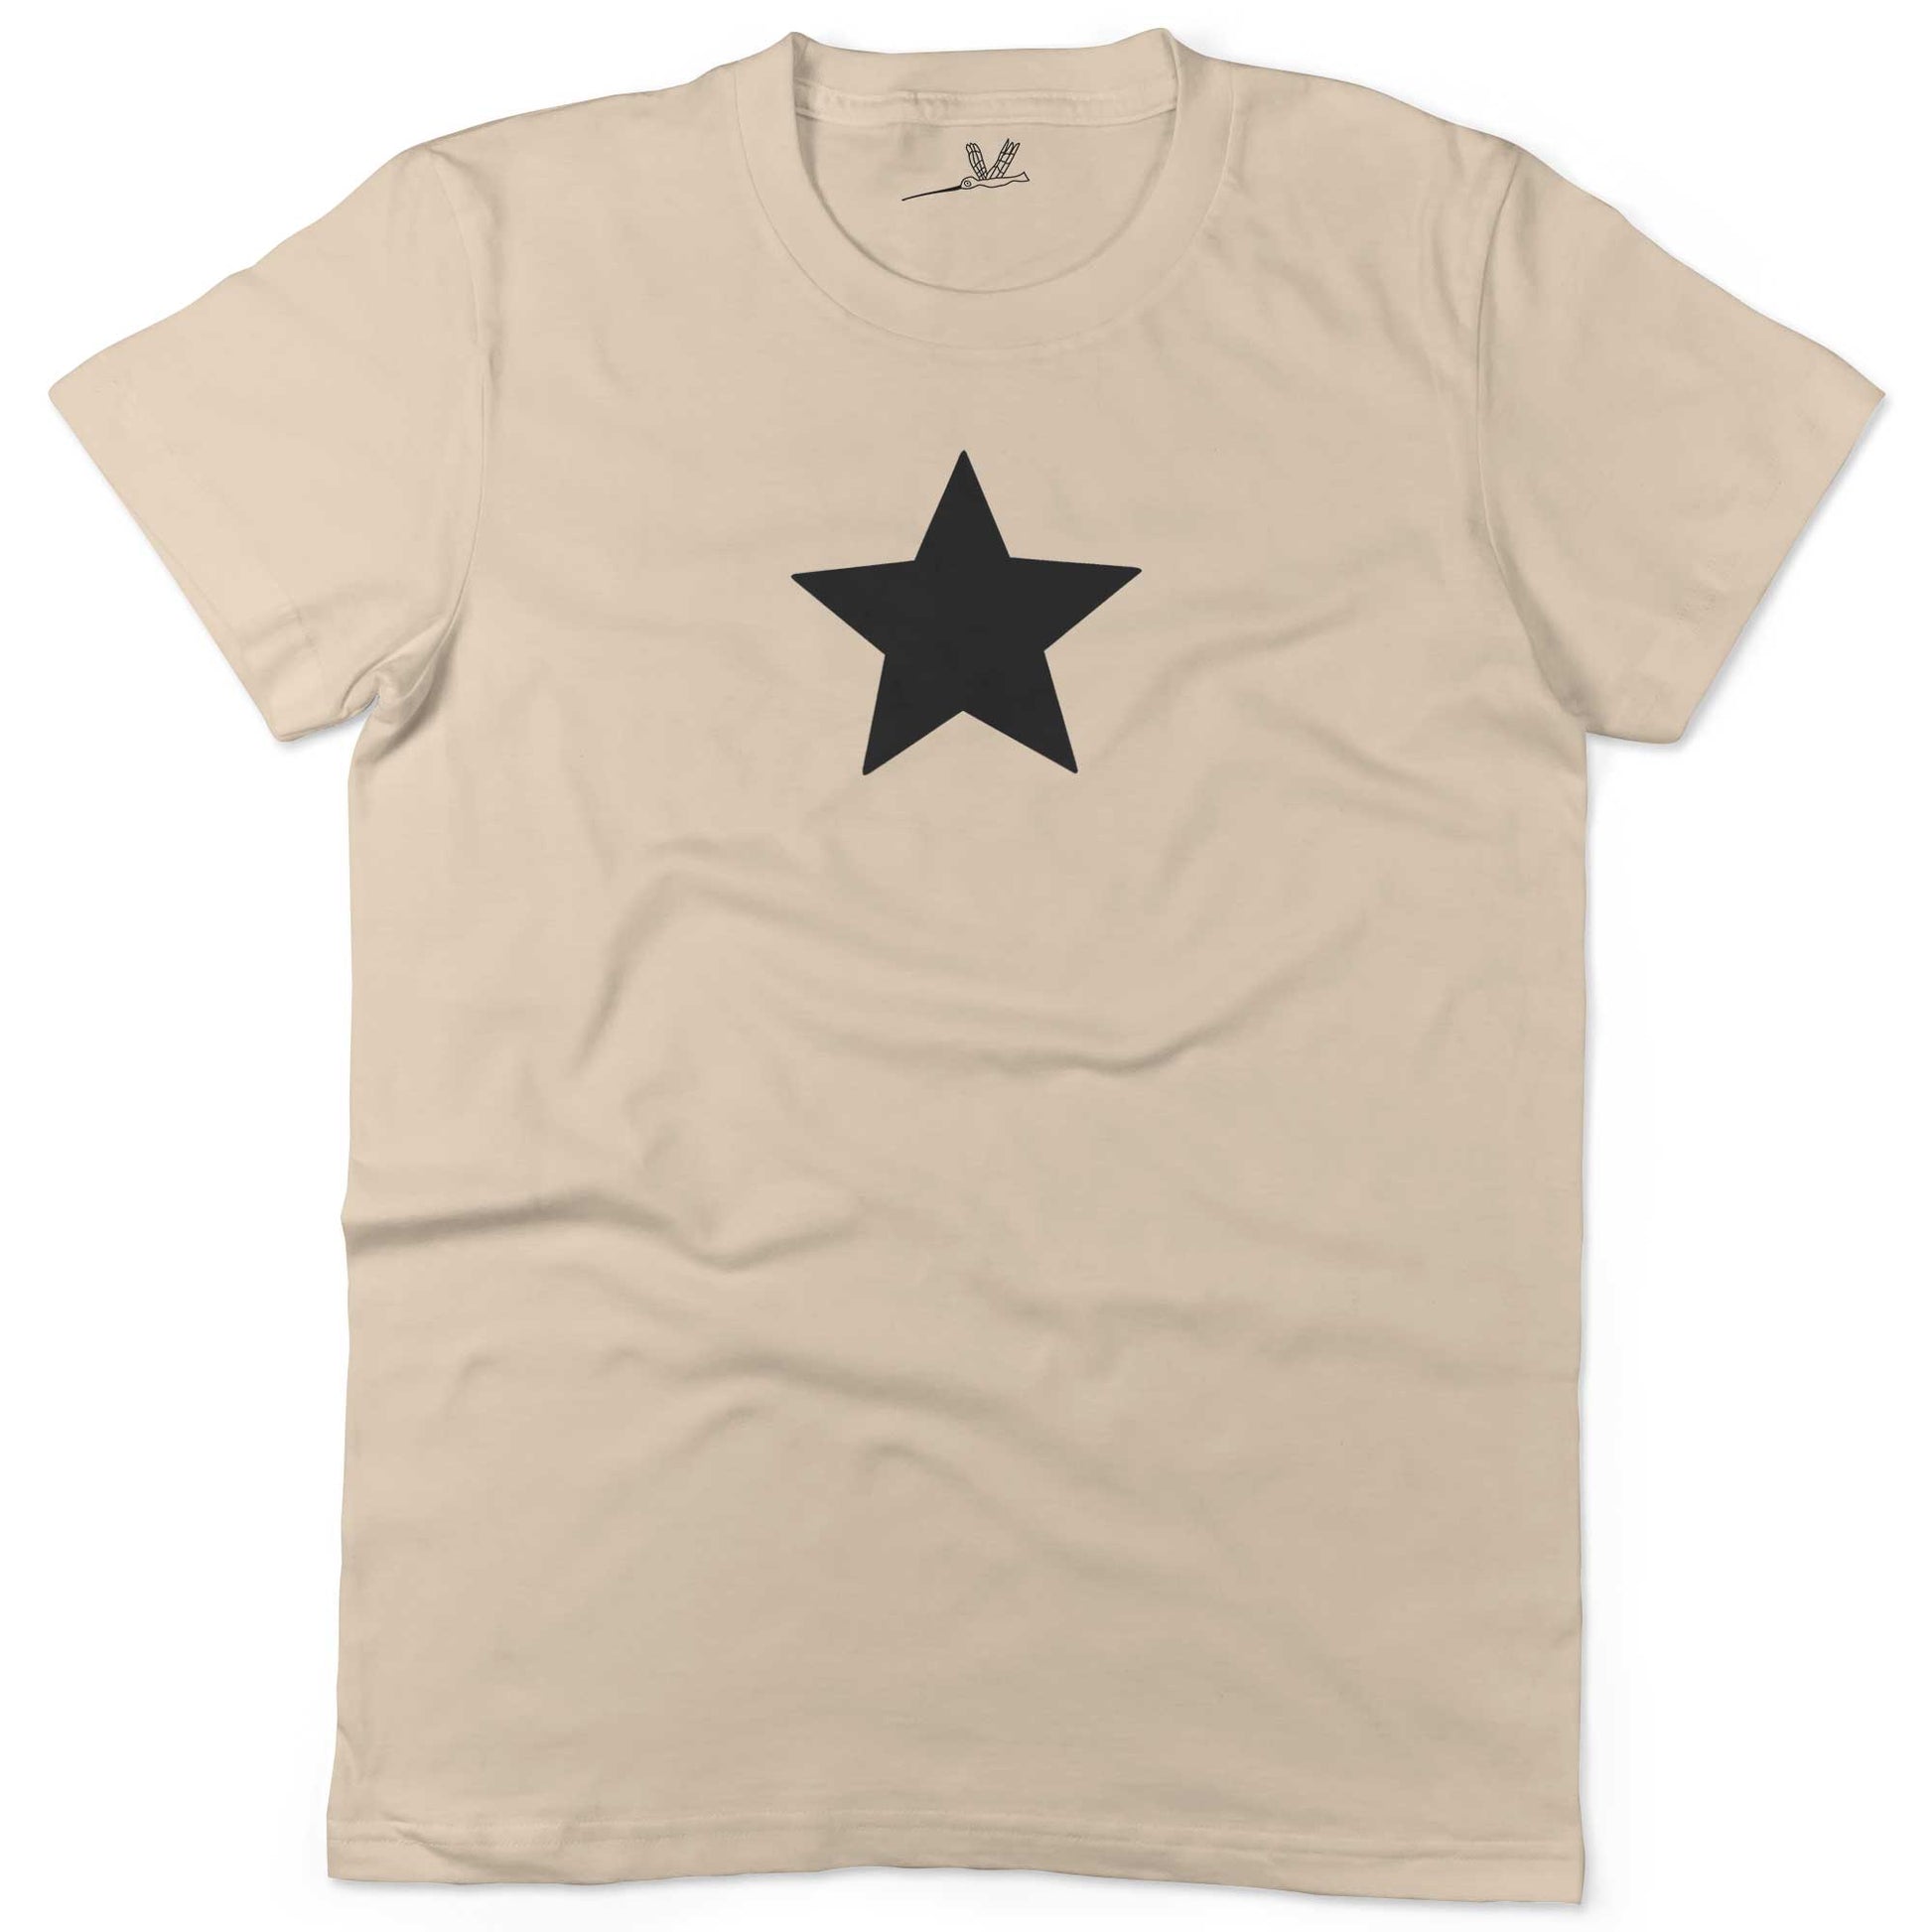 Star Unisex Or Women's Cotton T-shirt-Organic Natural-Women